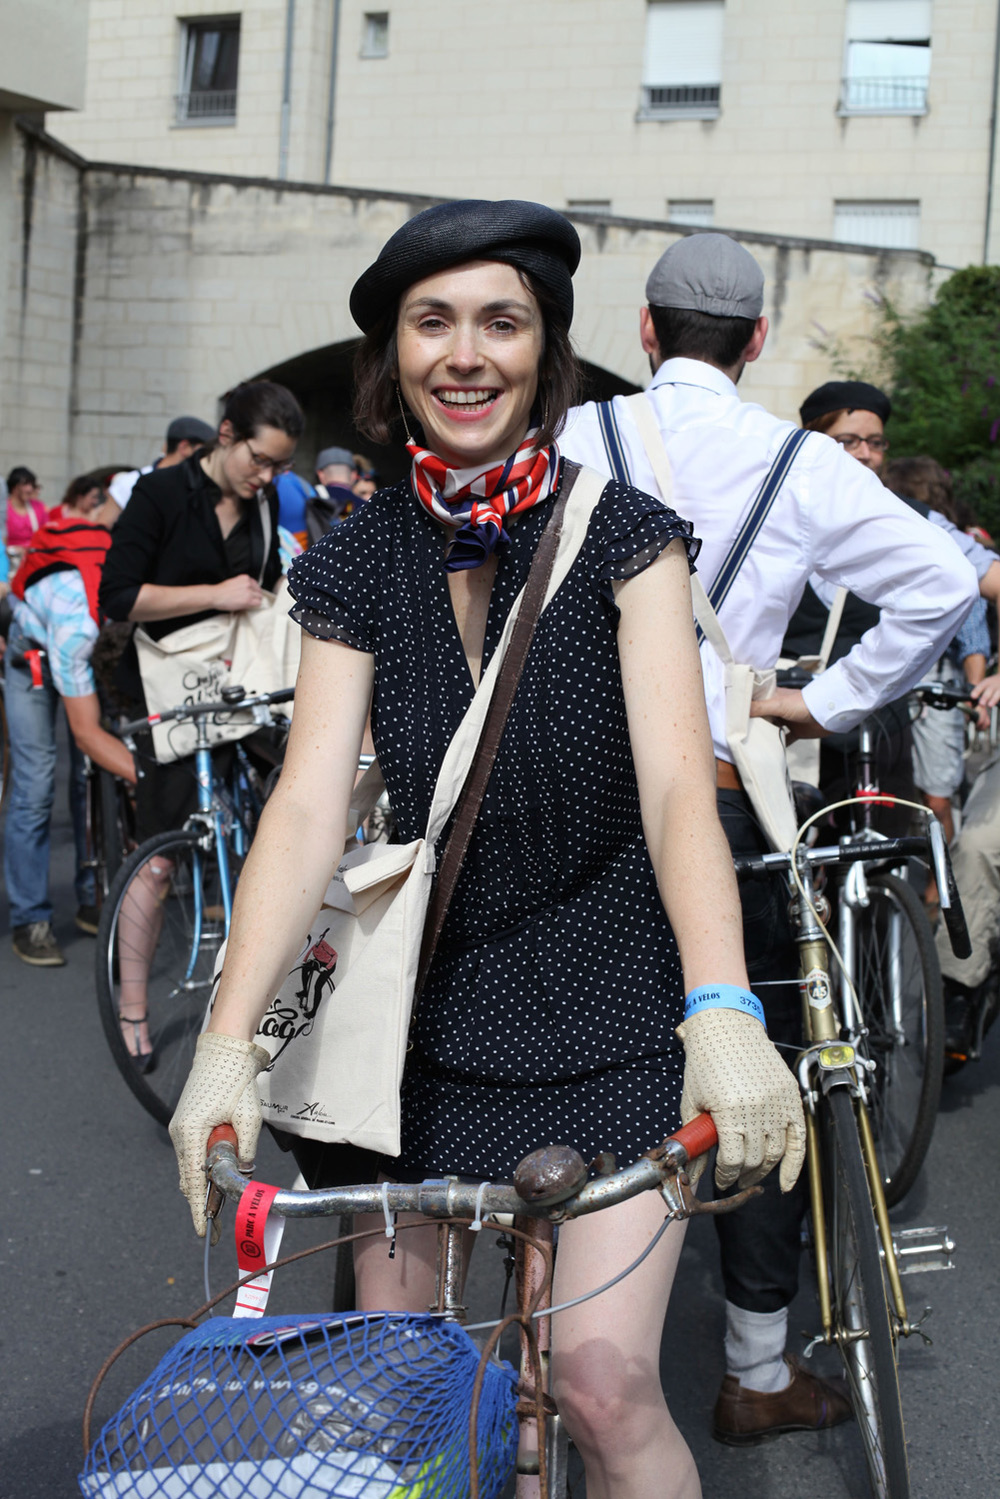 Goodbye-Anjou-Velo-Vintage-Bike-Pretty-Bike-Fashion-2.jpg